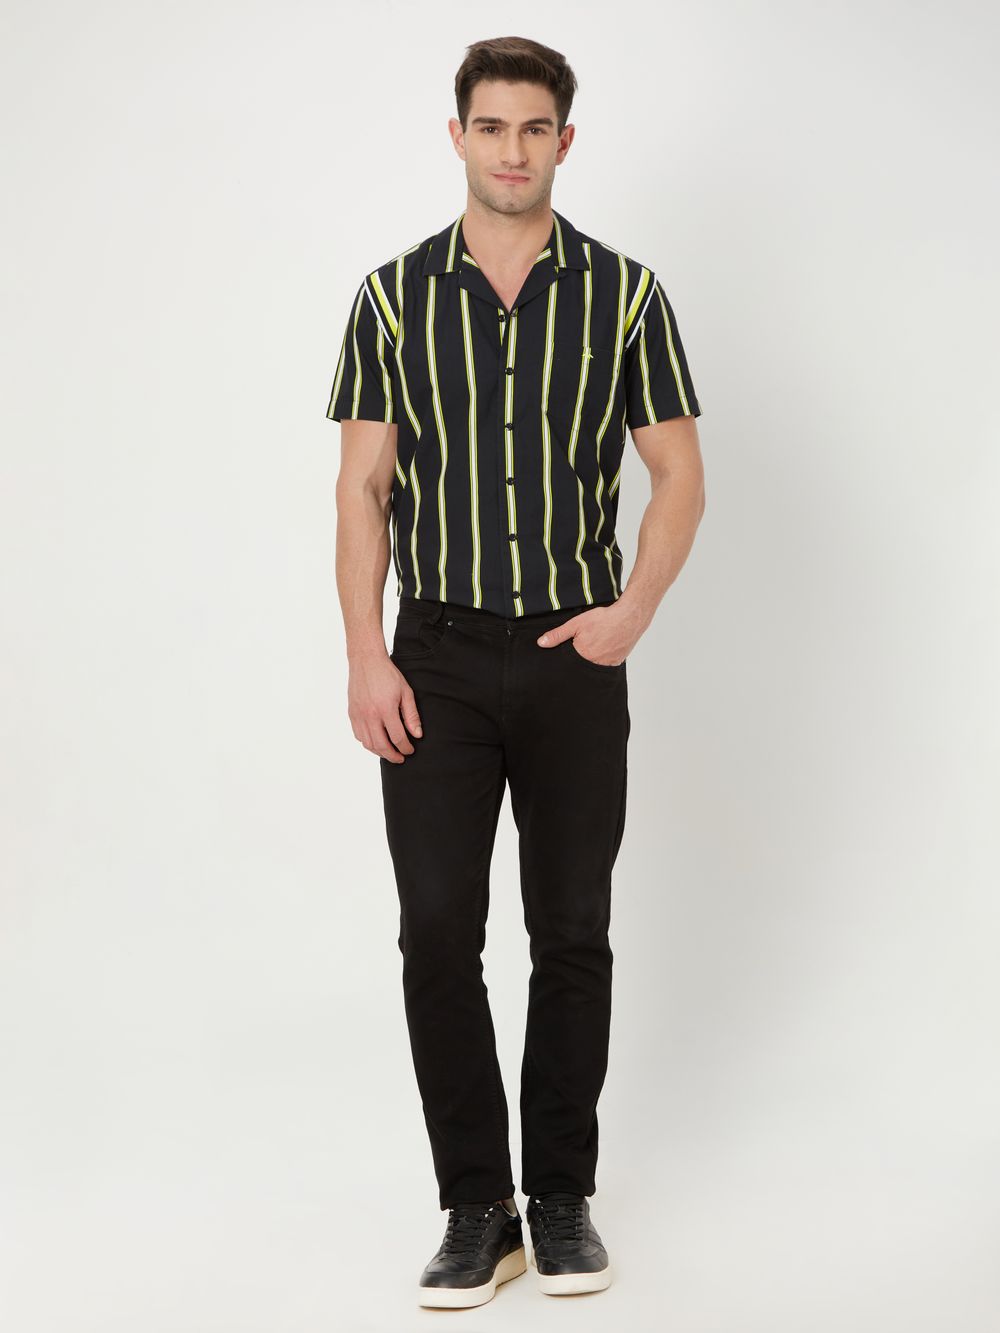 Black & Yellow Printed Stripe Shirt